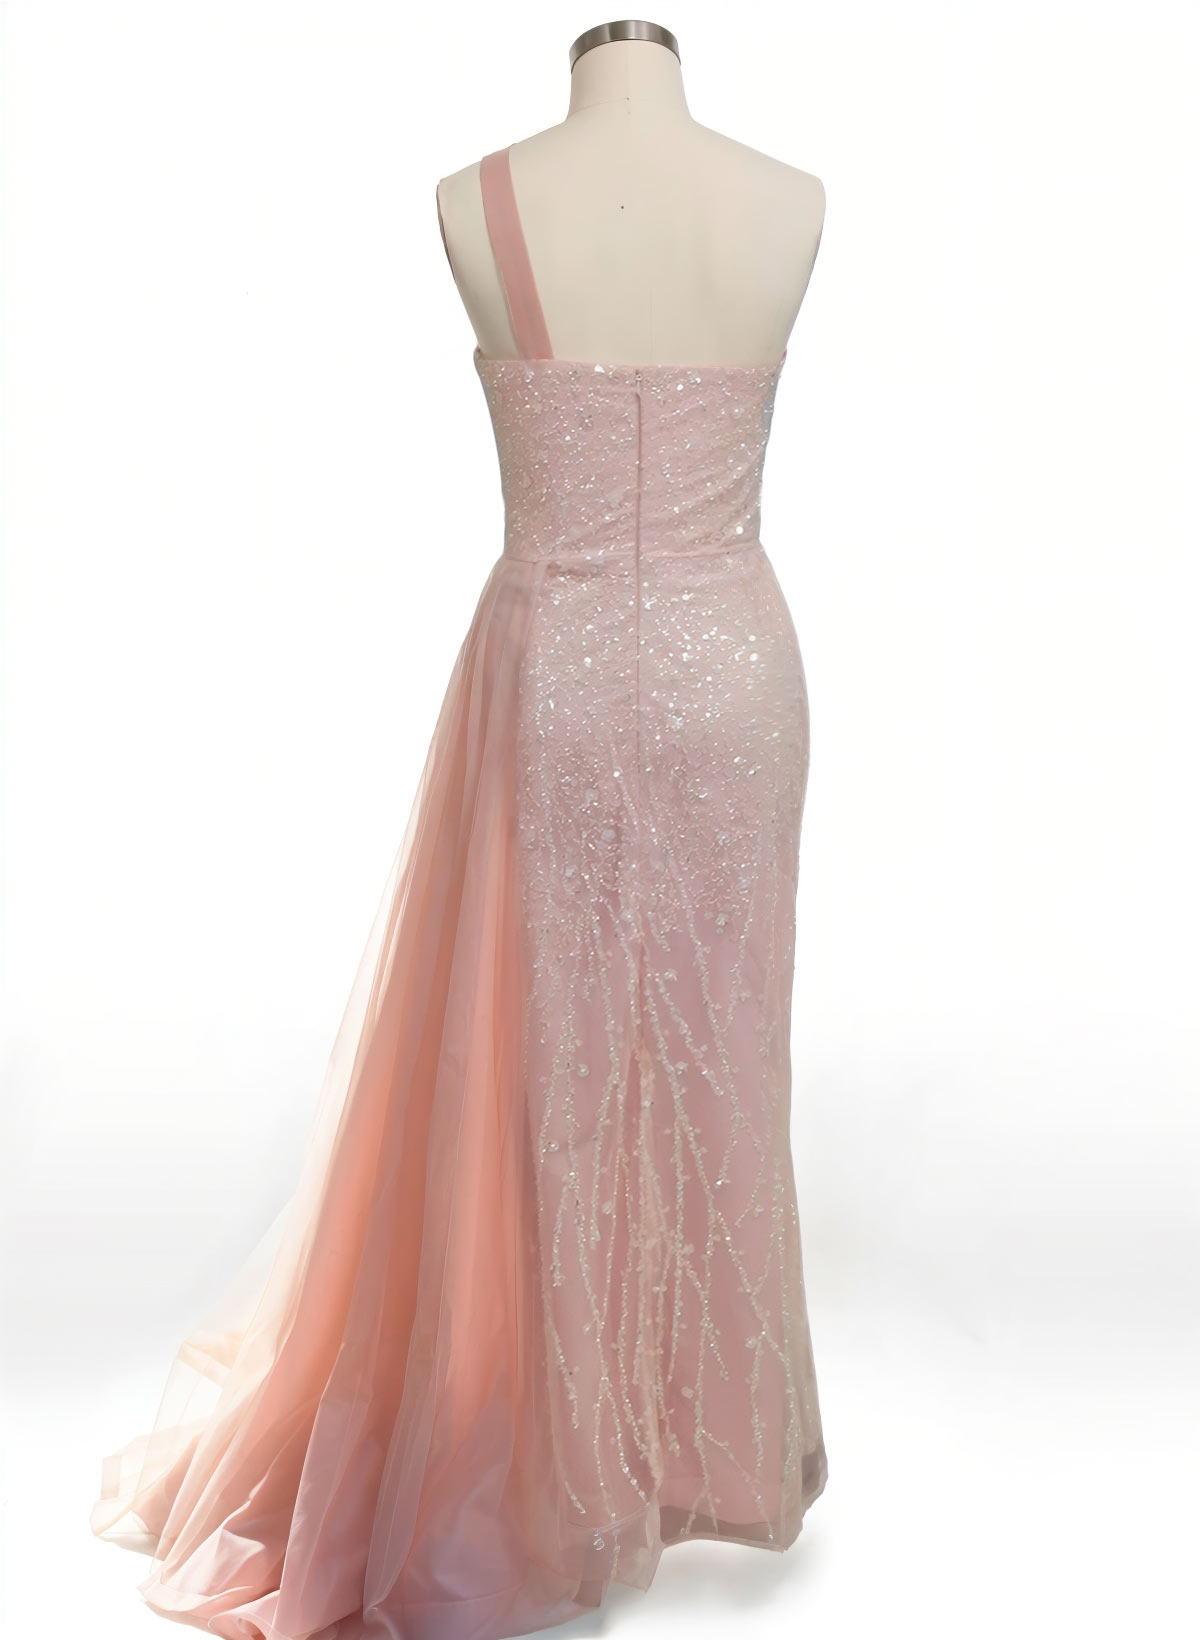 Trumpet/Mermaid One Shoulder Sequined Floor-Length Prom Dresss With Split Front Sequins